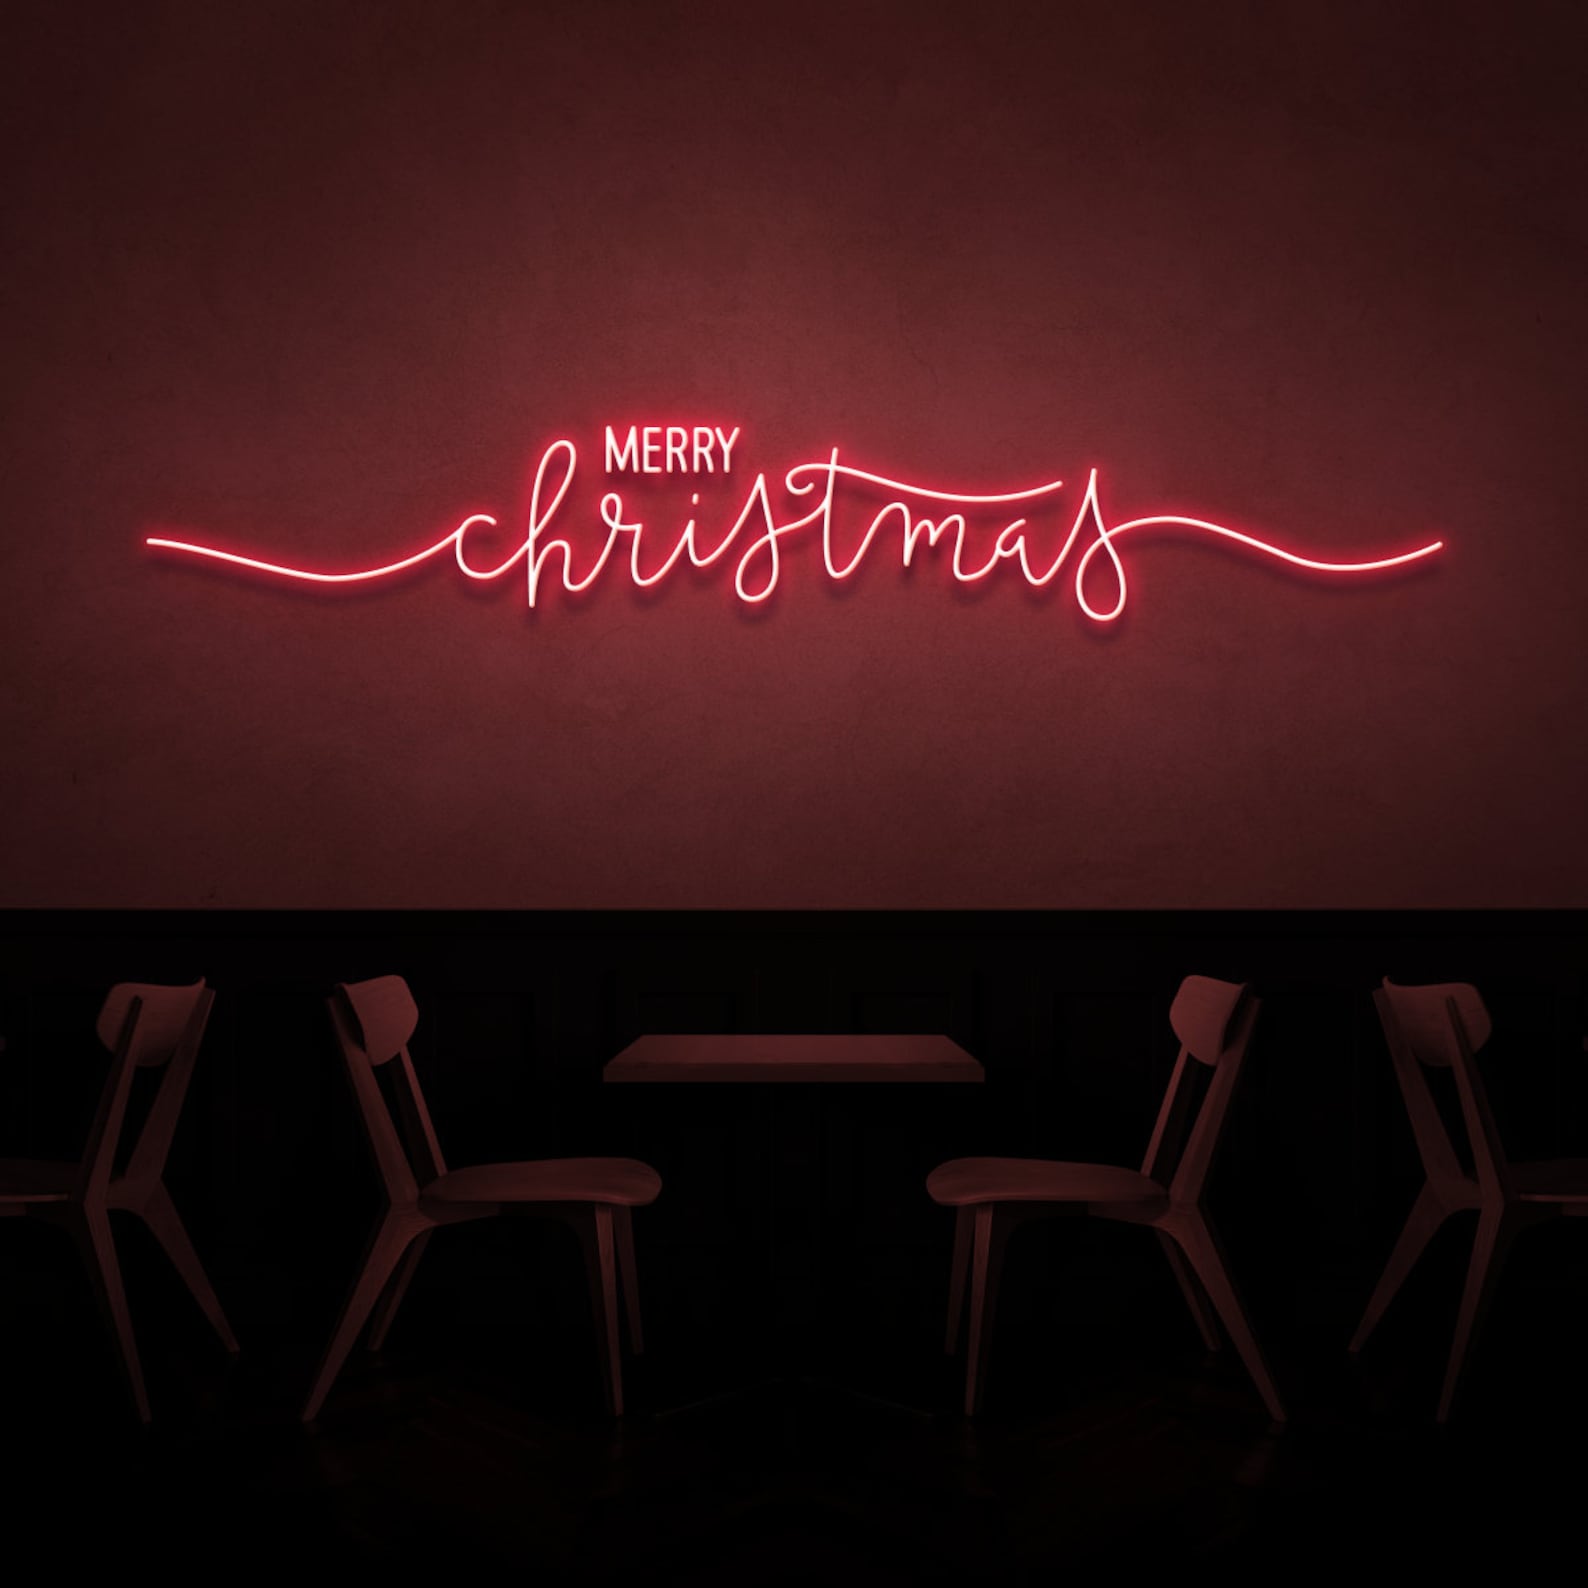 NEONIP-100% Handmade Merry Christmas Neon Sign Christmas Decorations